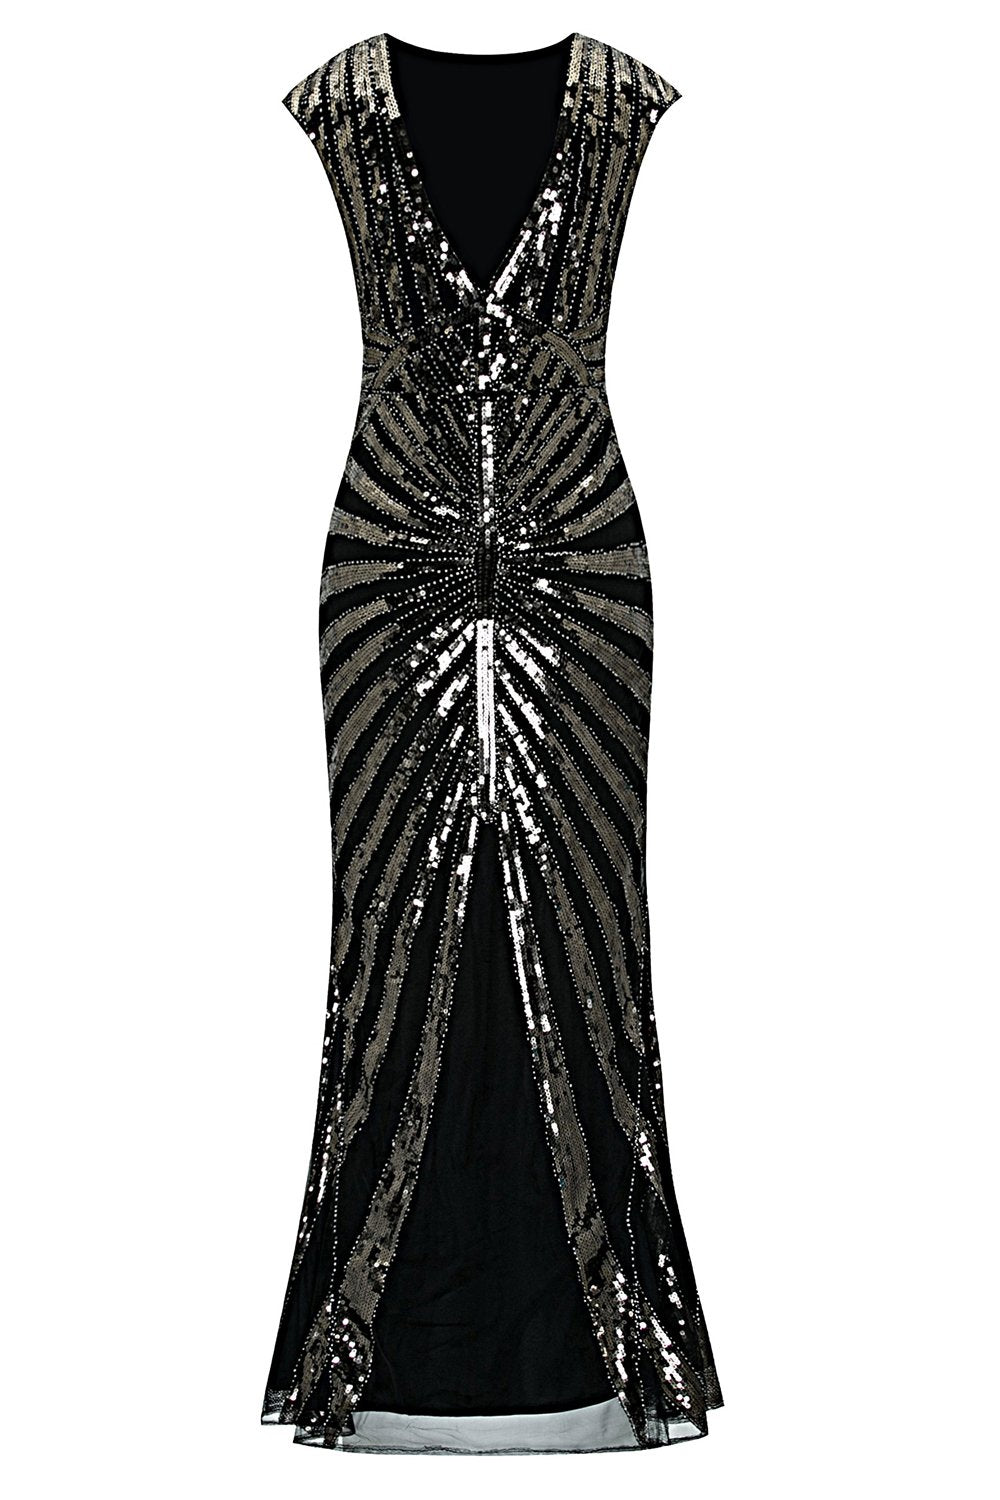 Black Mermaid 1920s Sequined Flapper Dress